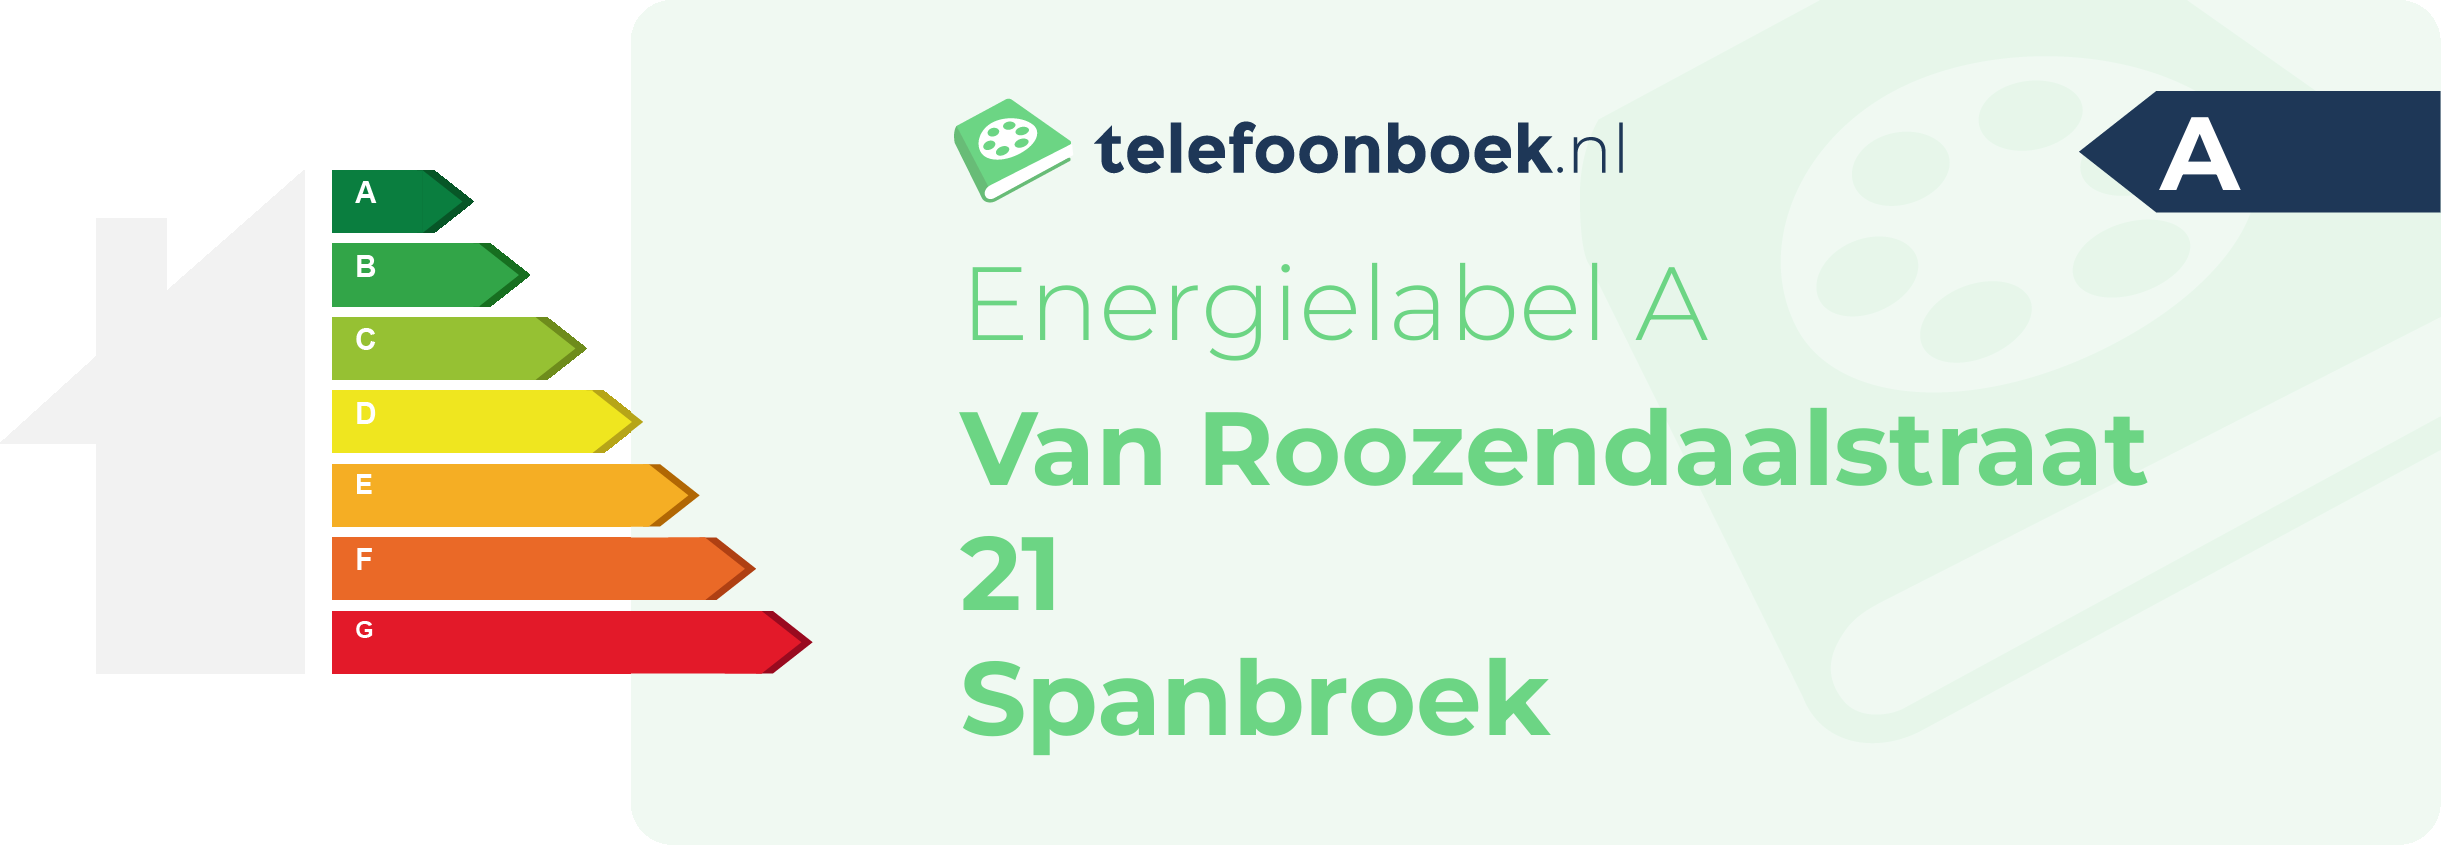 Energielabel Van Roozendaalstraat 21 Spanbroek